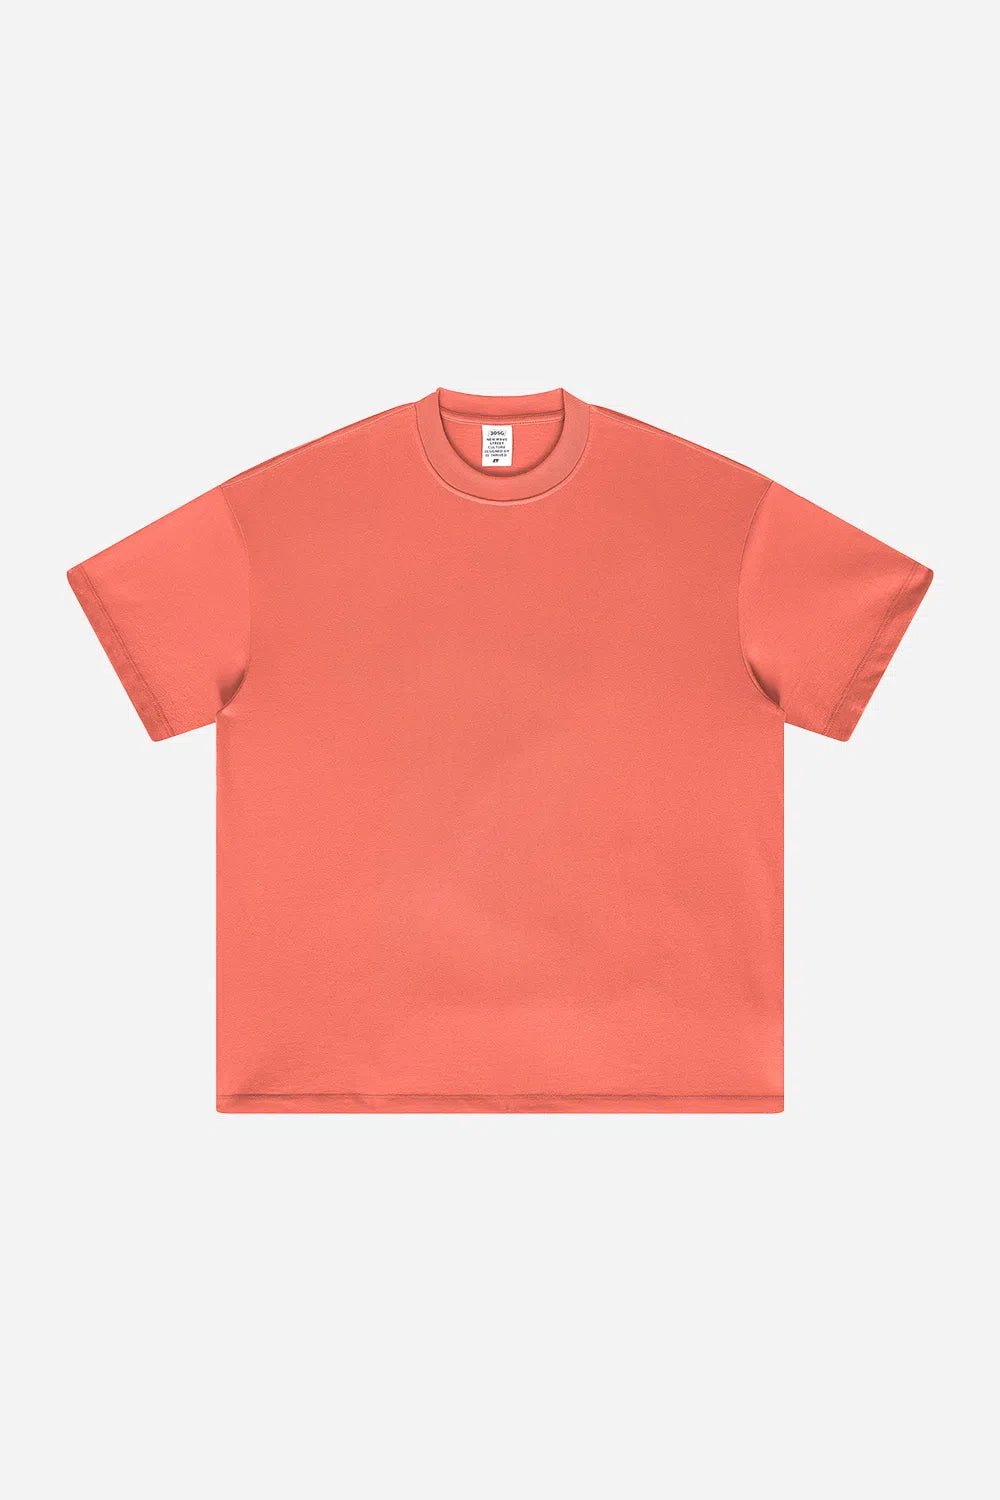 T-Shirt Blank Heavy 100% Cotton - ORANGE RED-LOTABY